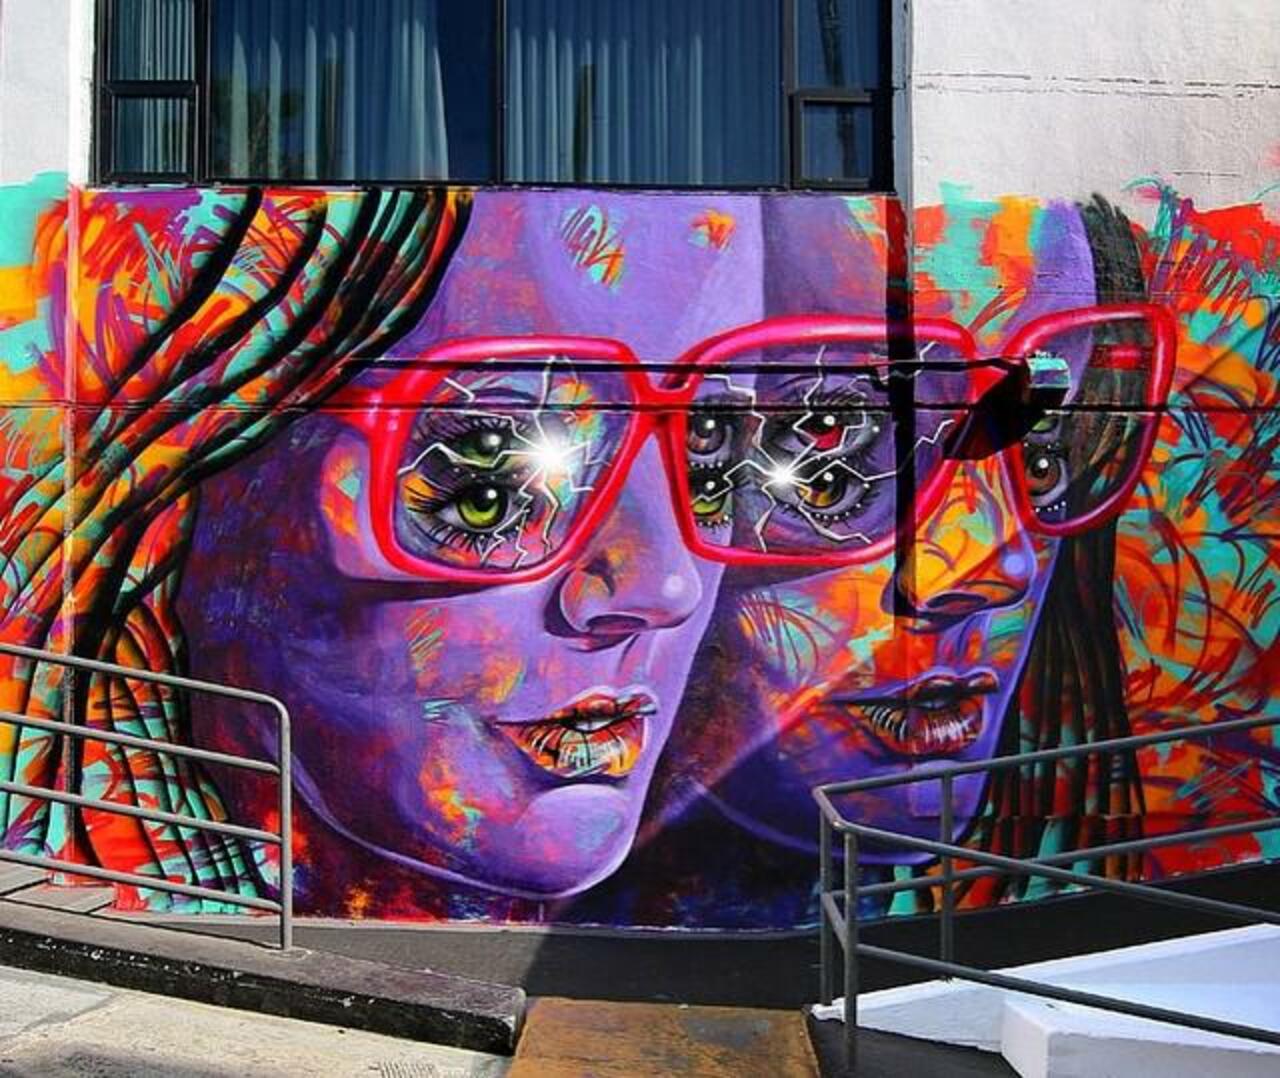 Fantastic new Street Art by MADSTEEZ 

#art #arte #graffiti #streetart http://t.co/APne4rU0GV